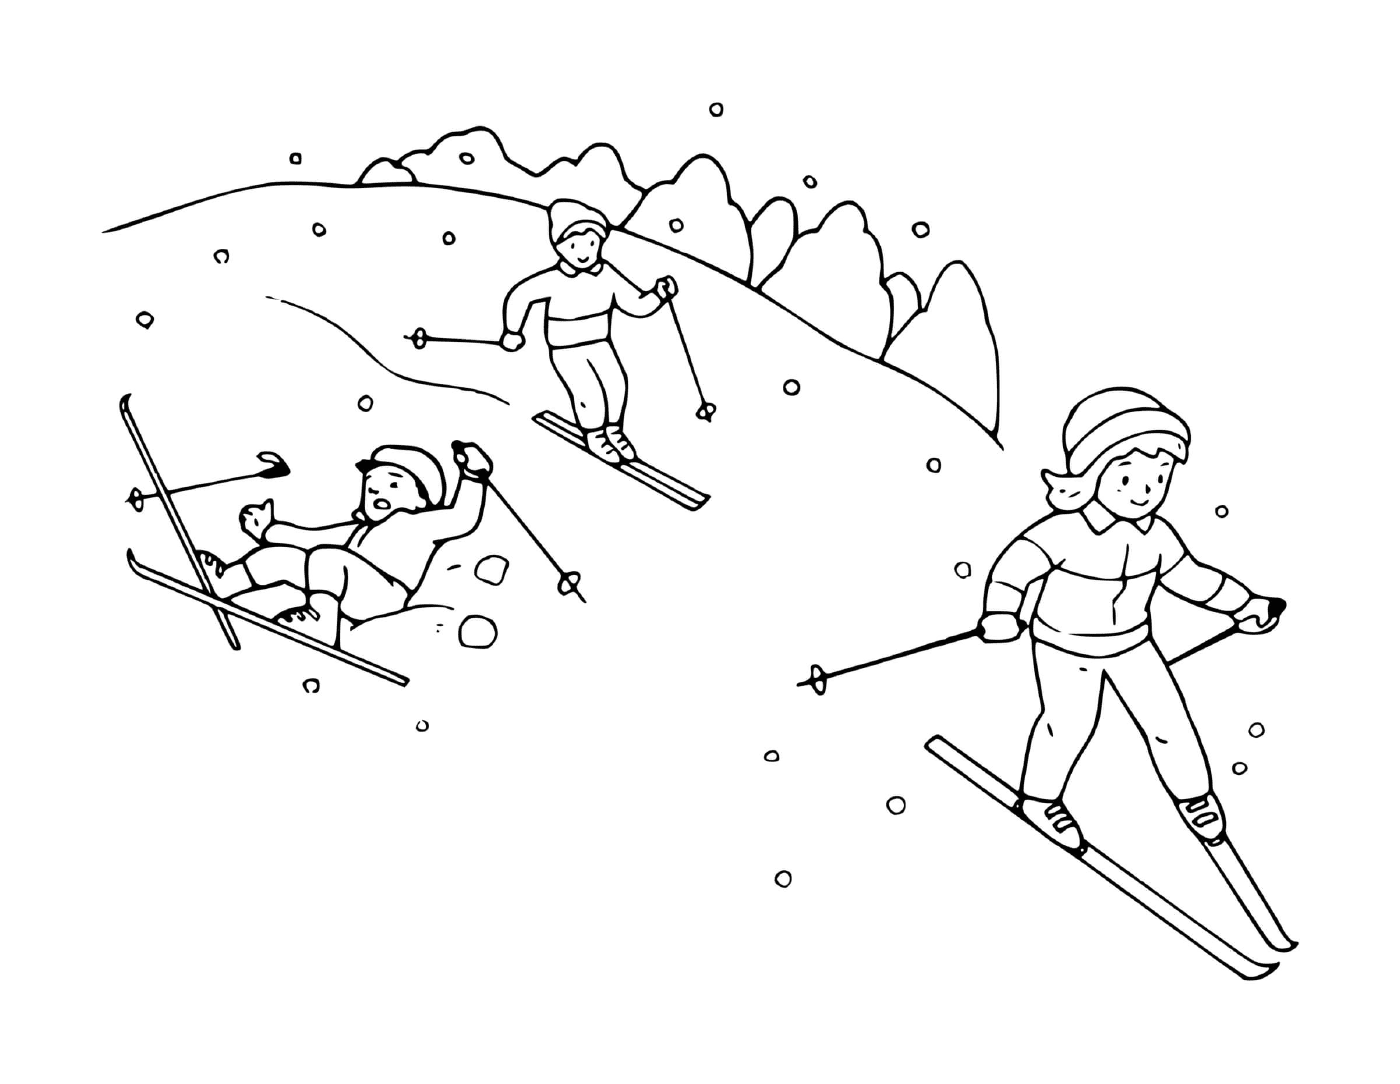  Family having fun skiing together 